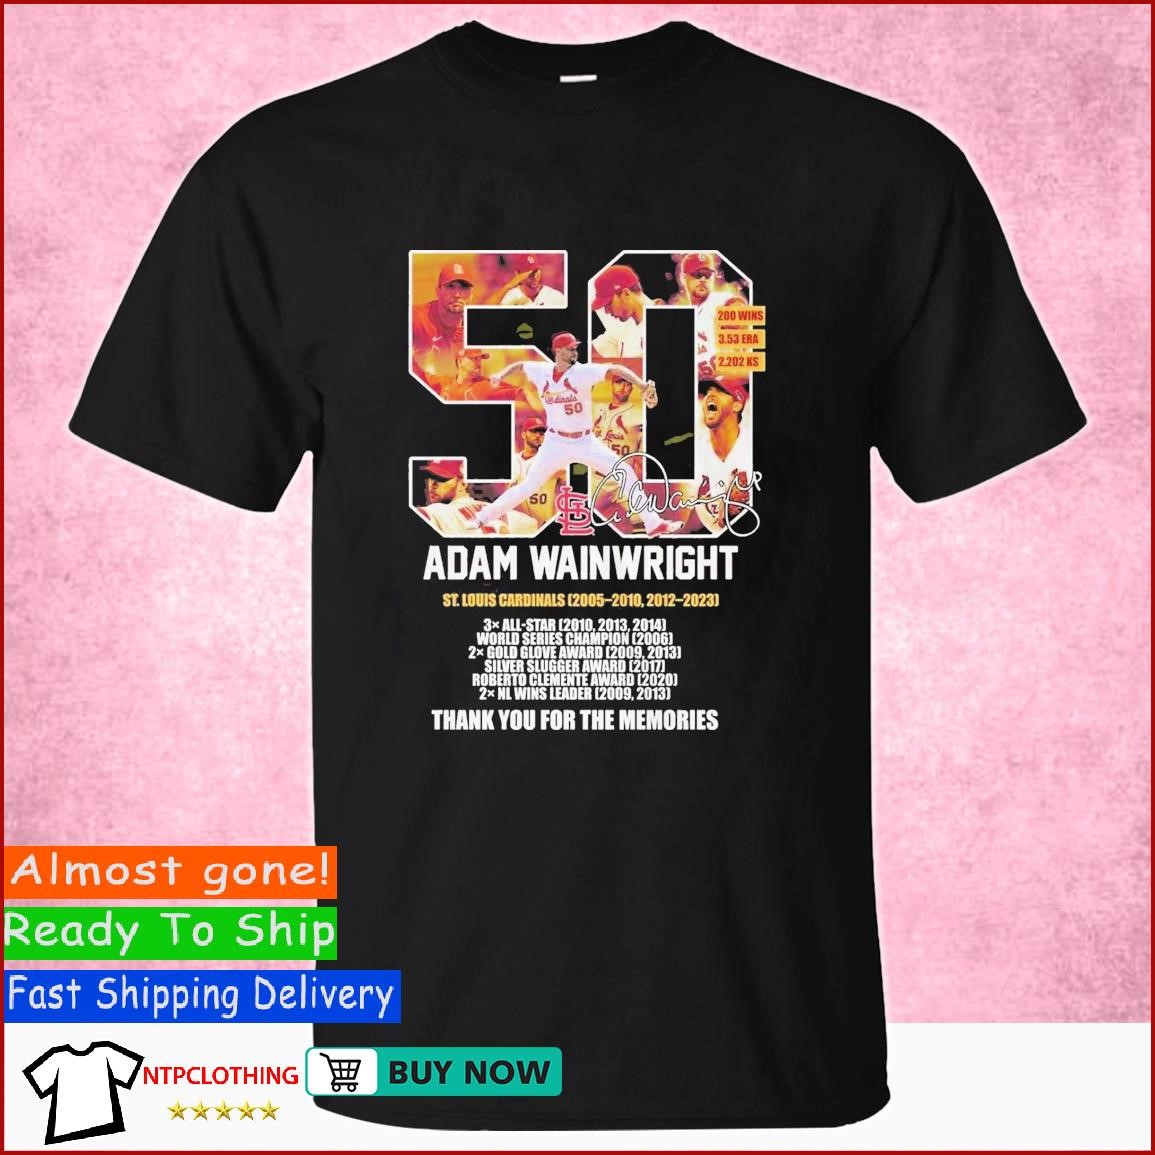 Adam Wainwright T-Shirts for Sale